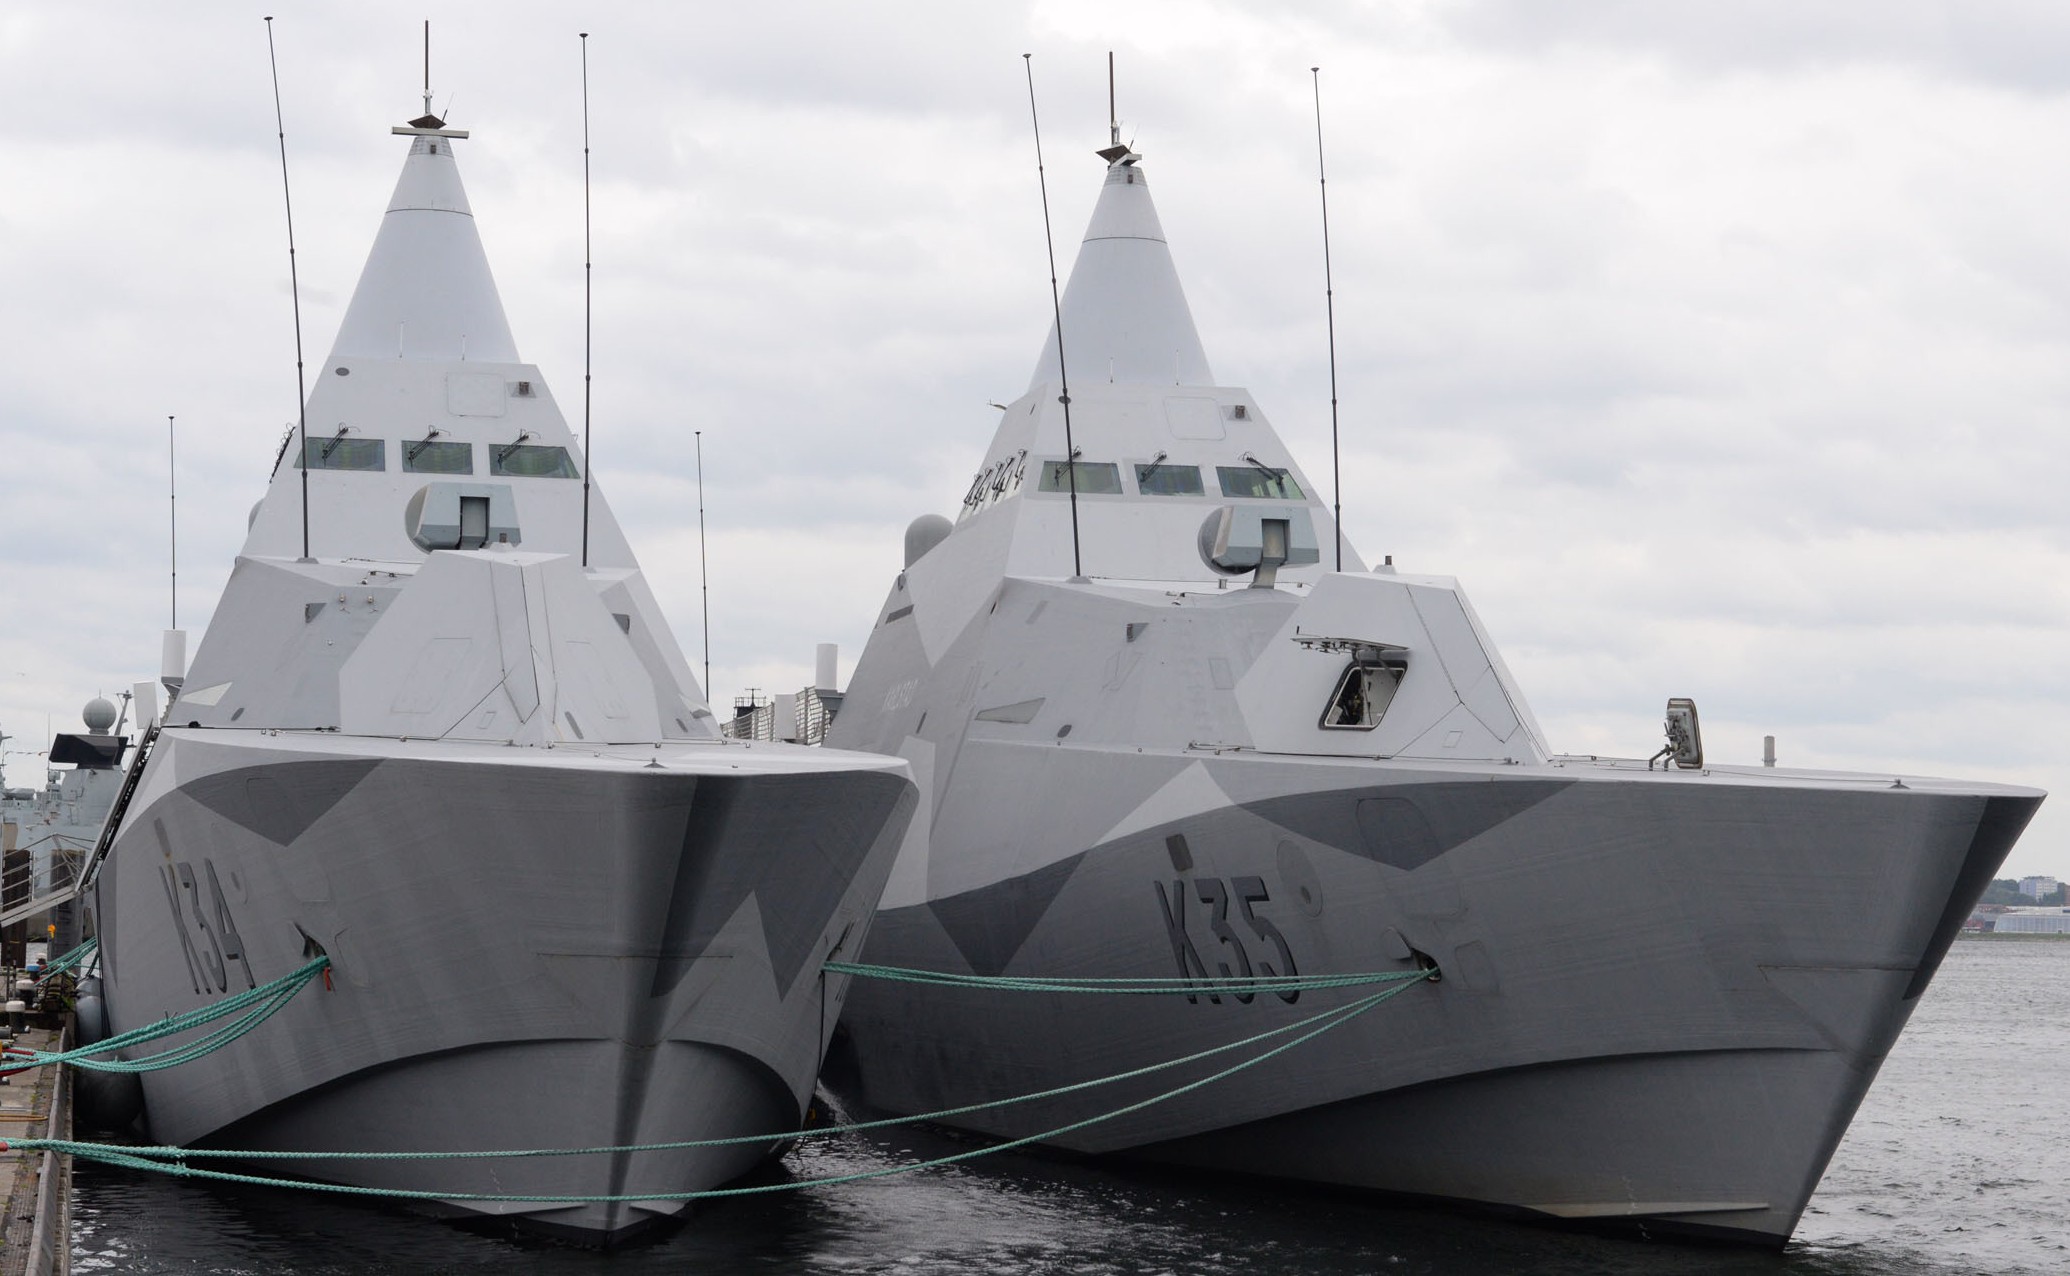 k35 hswms hms karlstad visby class corvette royal swedish navy svenska marinen 15